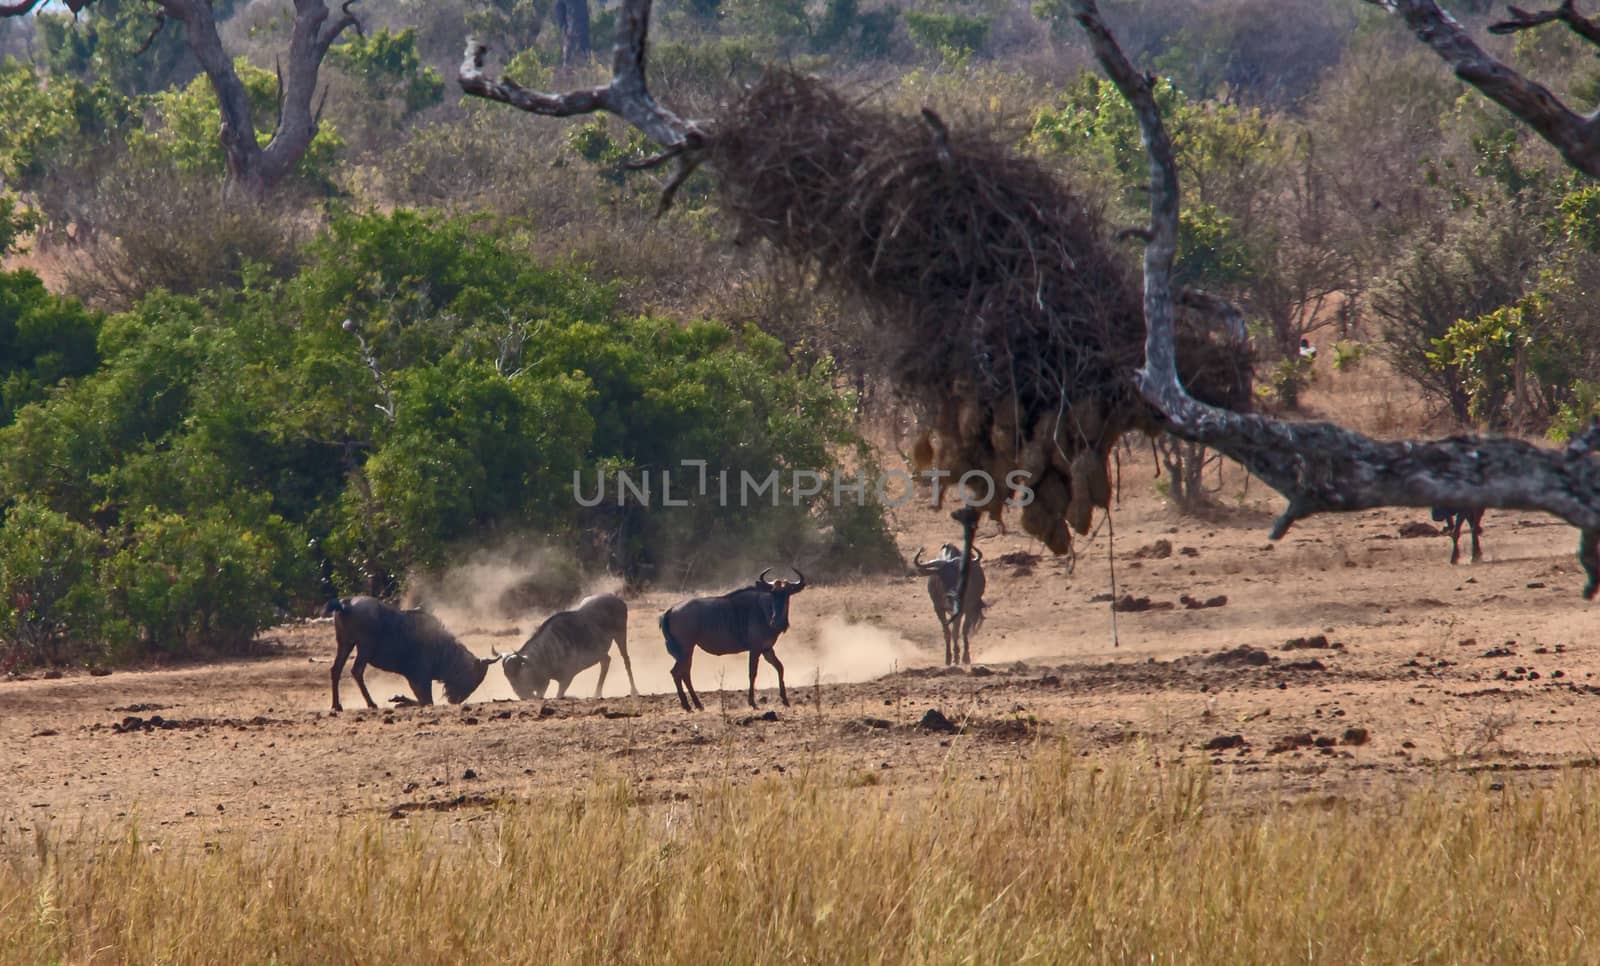 Fighting Wildebeest by kobus_peche